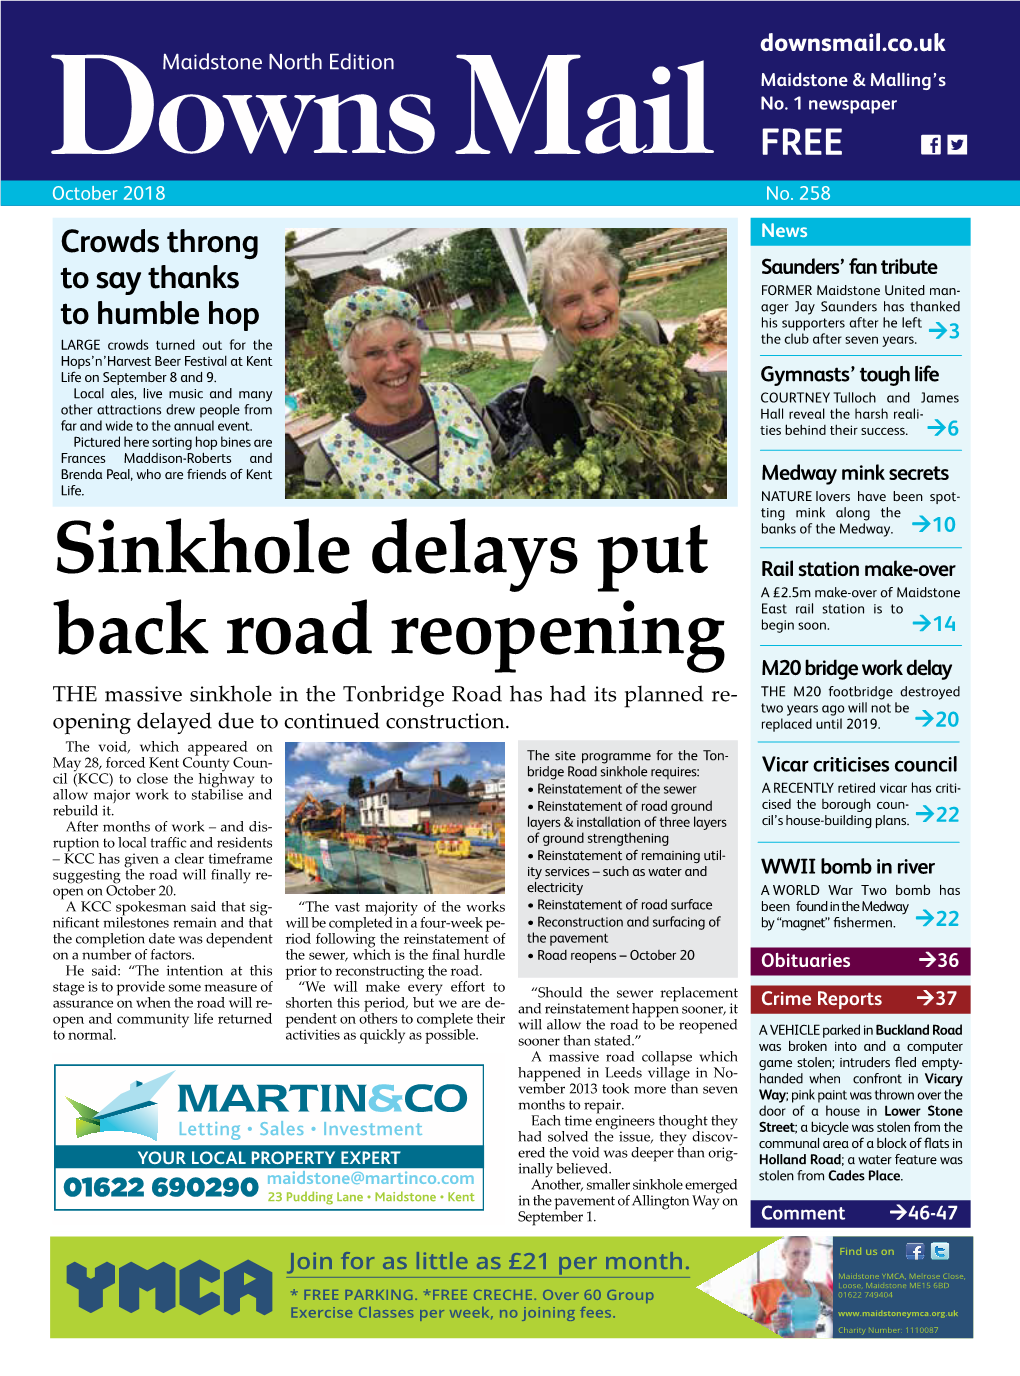 Sinkhole Delays Put Back Road Reopening